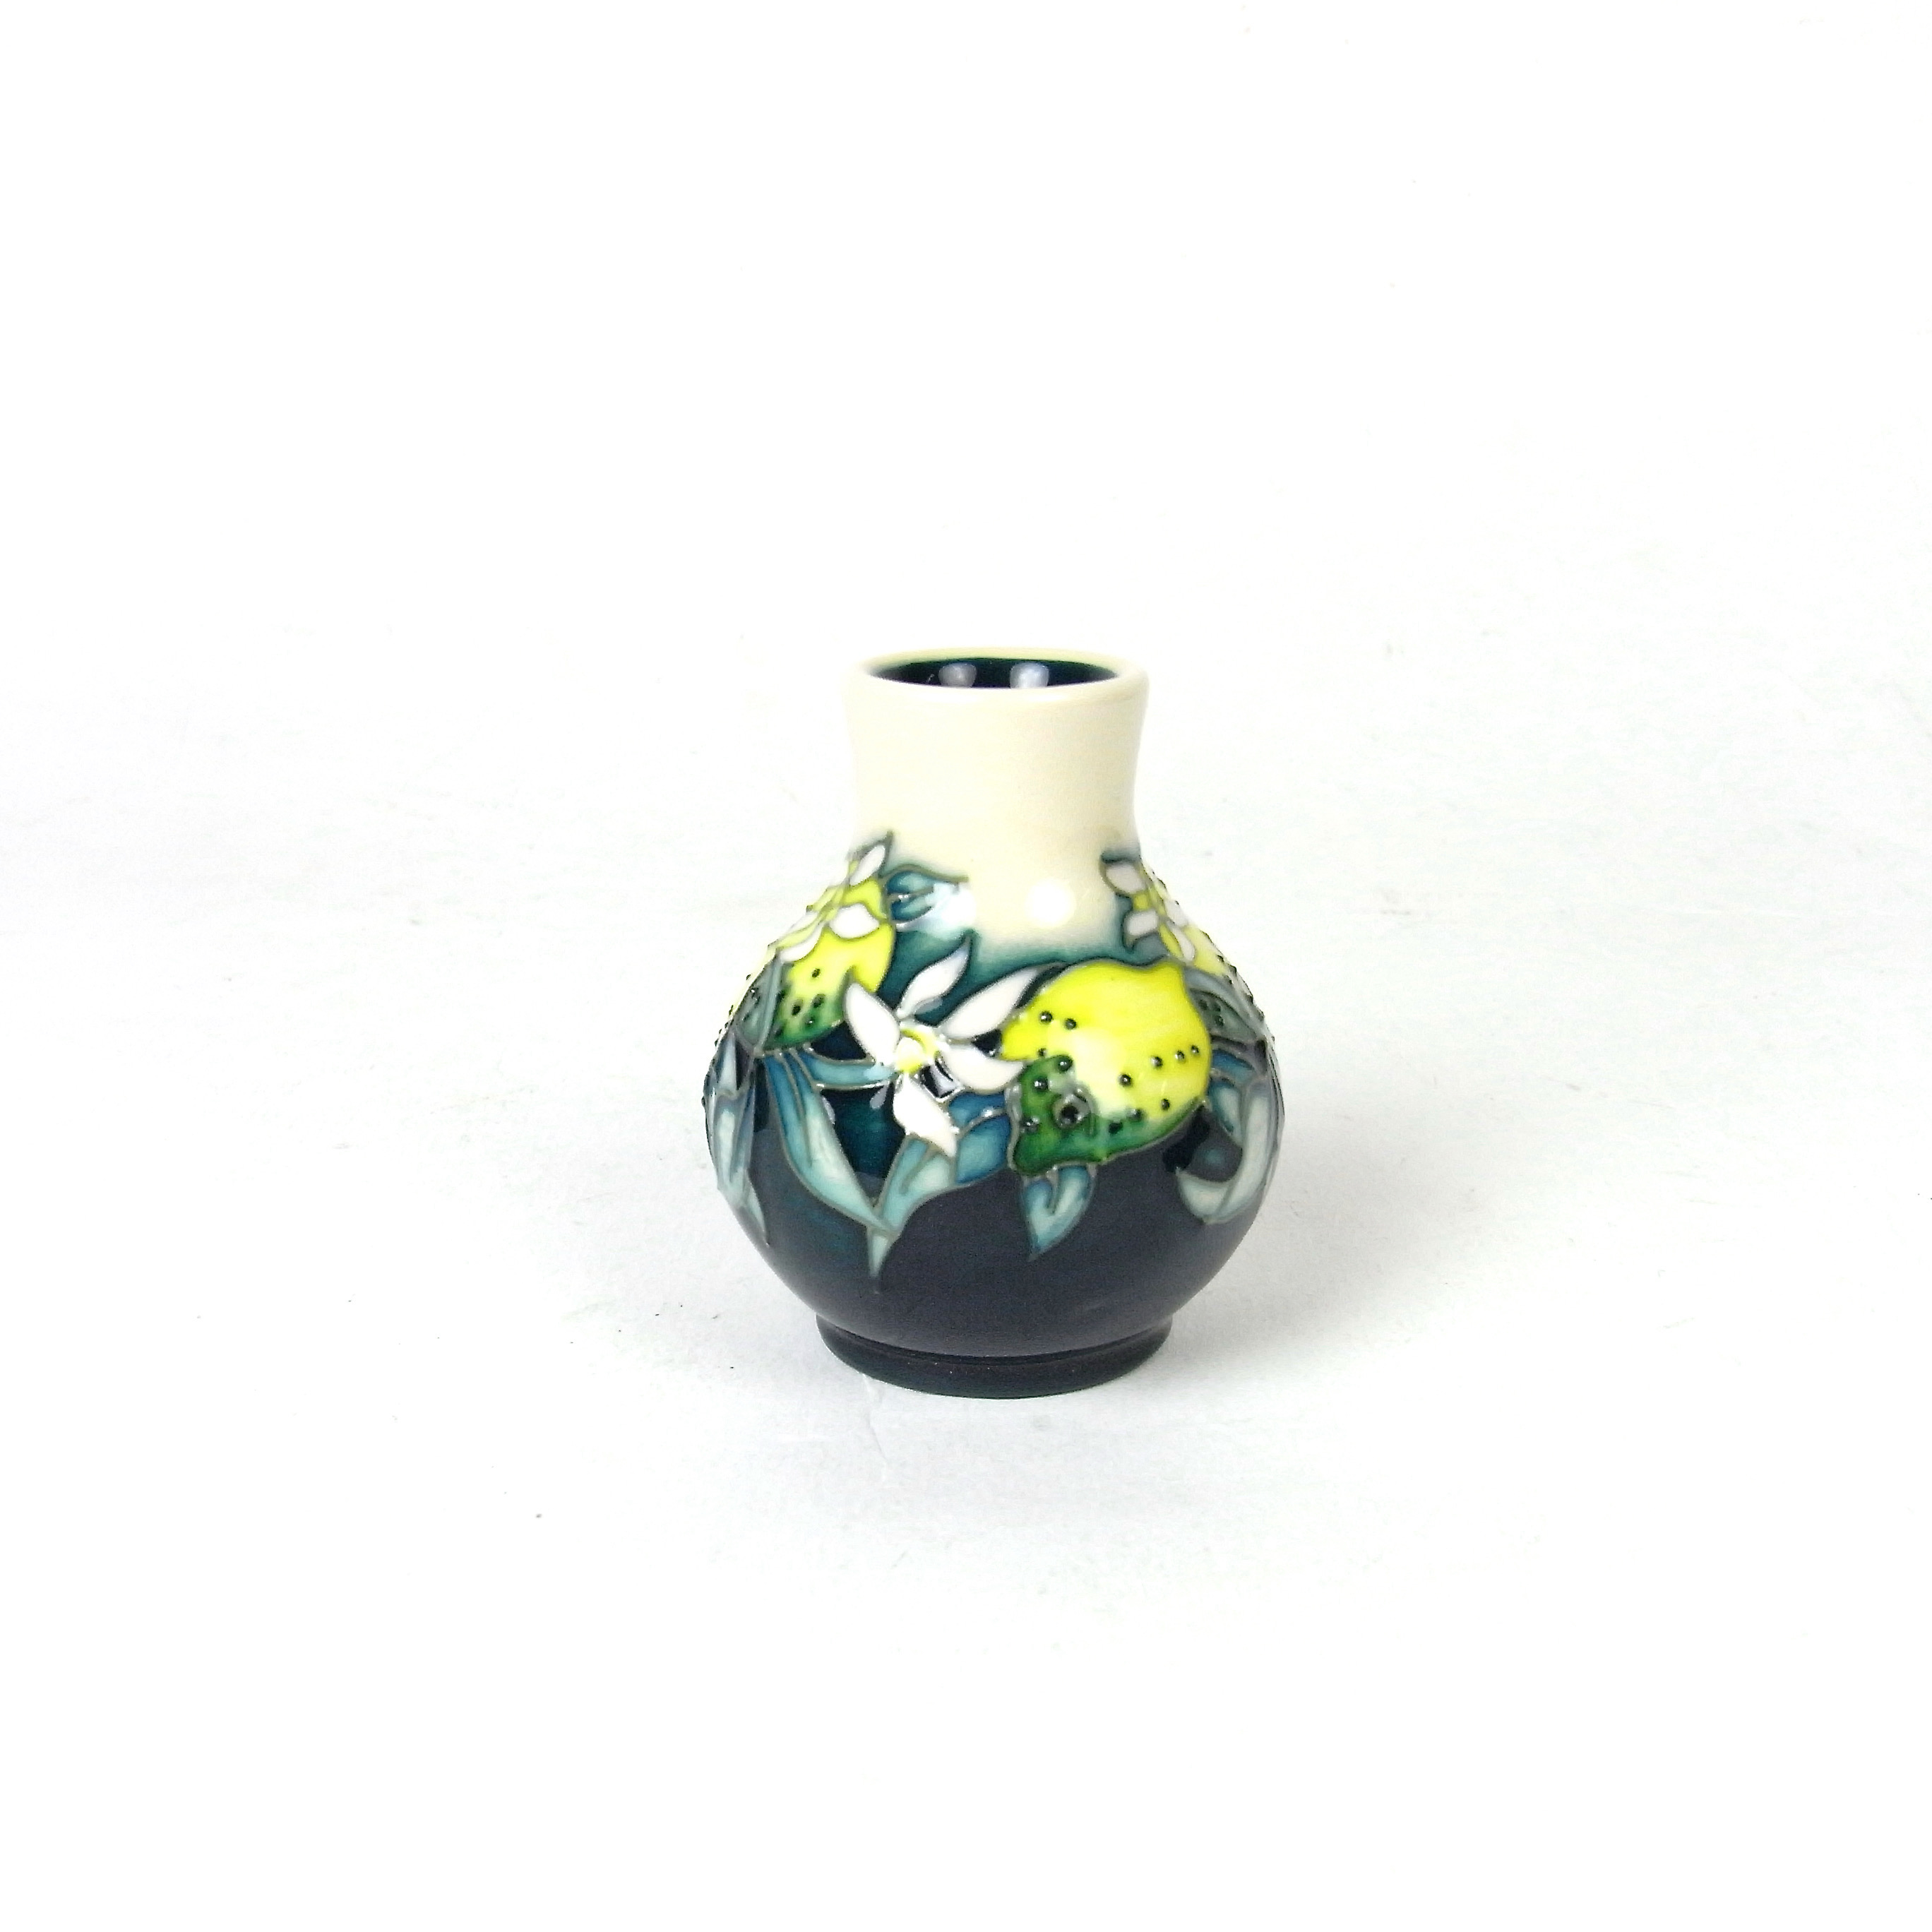 A modern Moorcroft miniature Lemon pattern vase, circa 2008